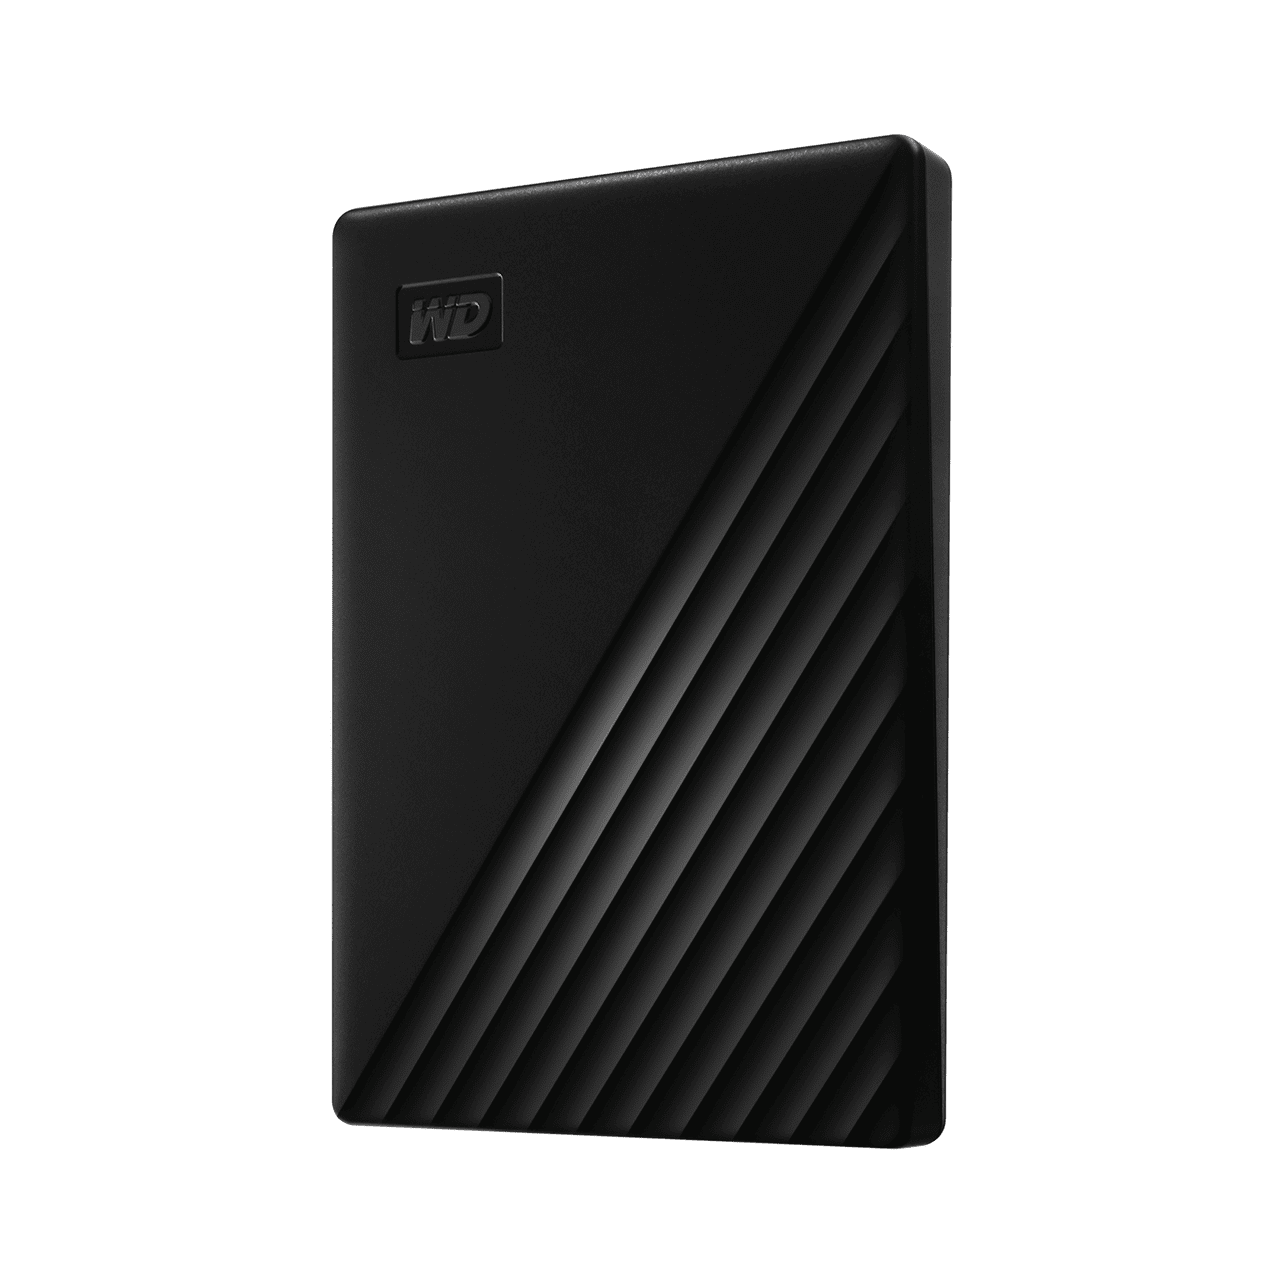 WD My Passport Portable External HDD 1TB (Black) 